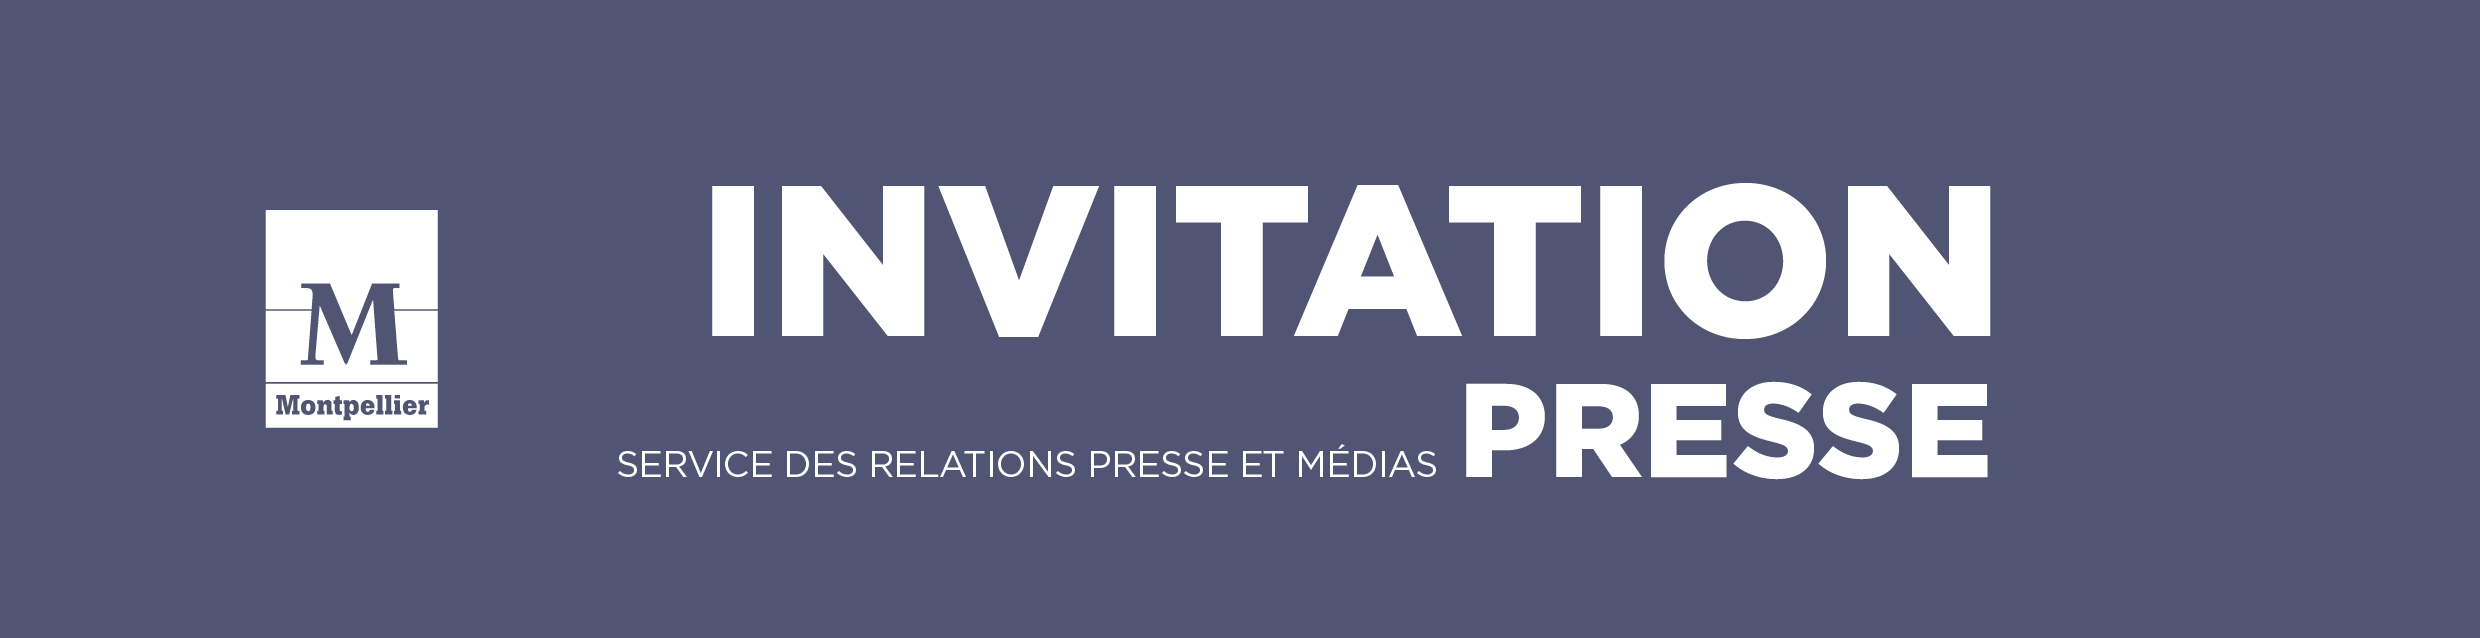 Bandeau Ville-Invitation presse_01 22.png